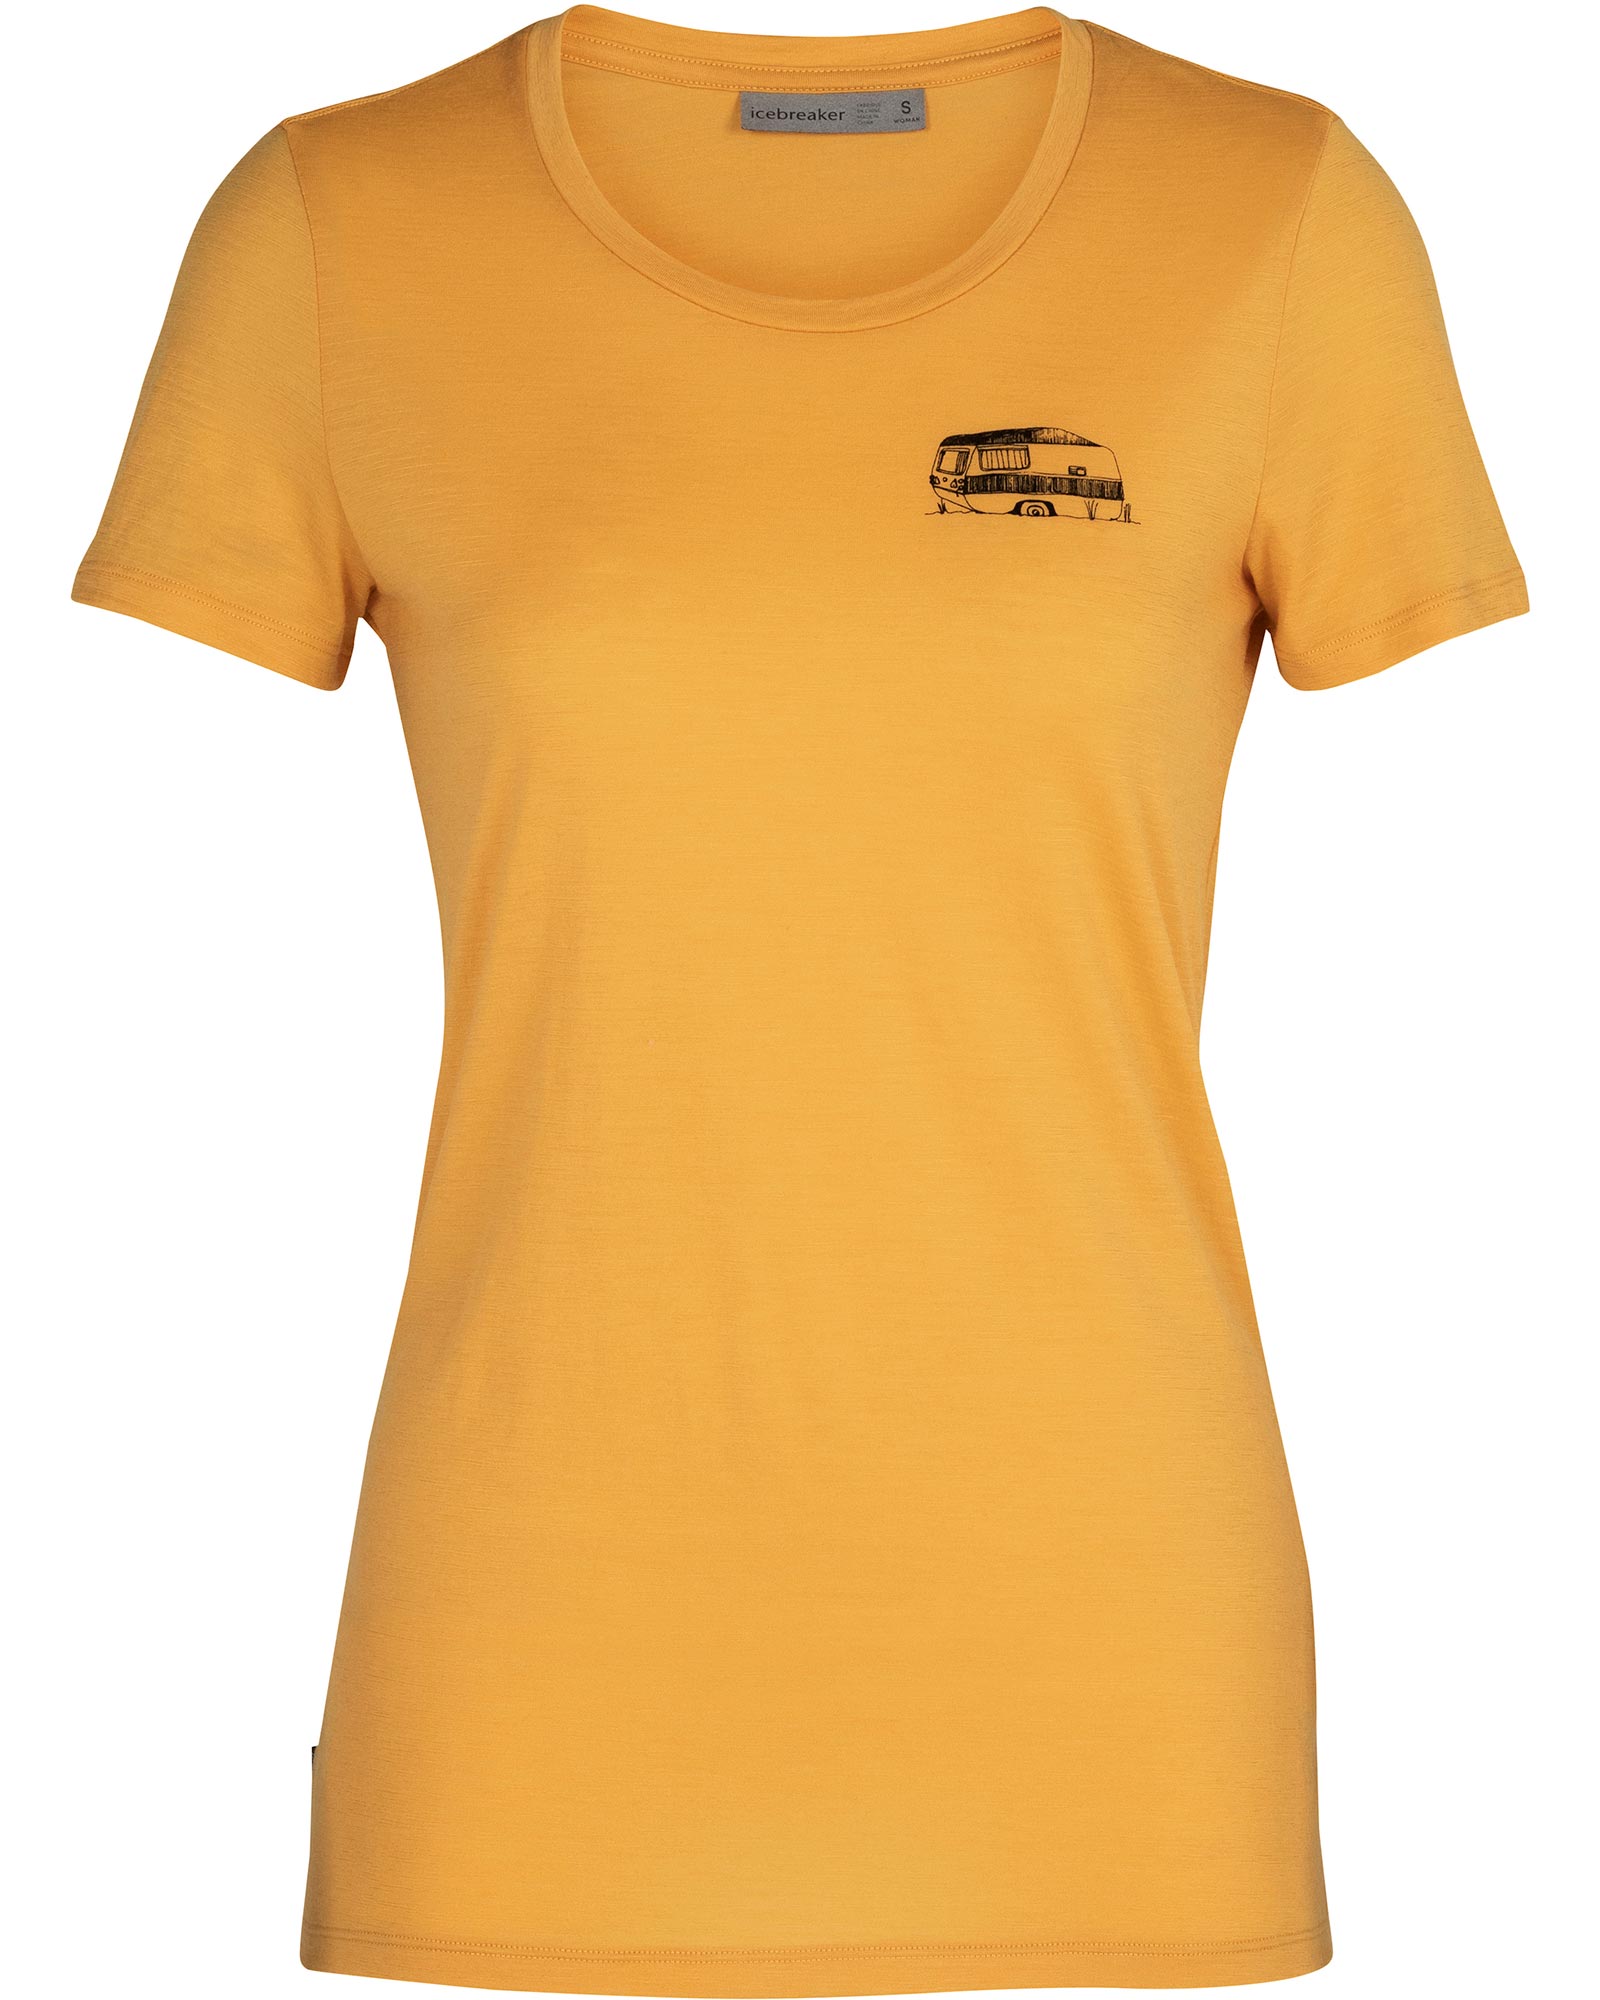 icebreaker Women's Merino Tech Lite Low Crew T-Shirt